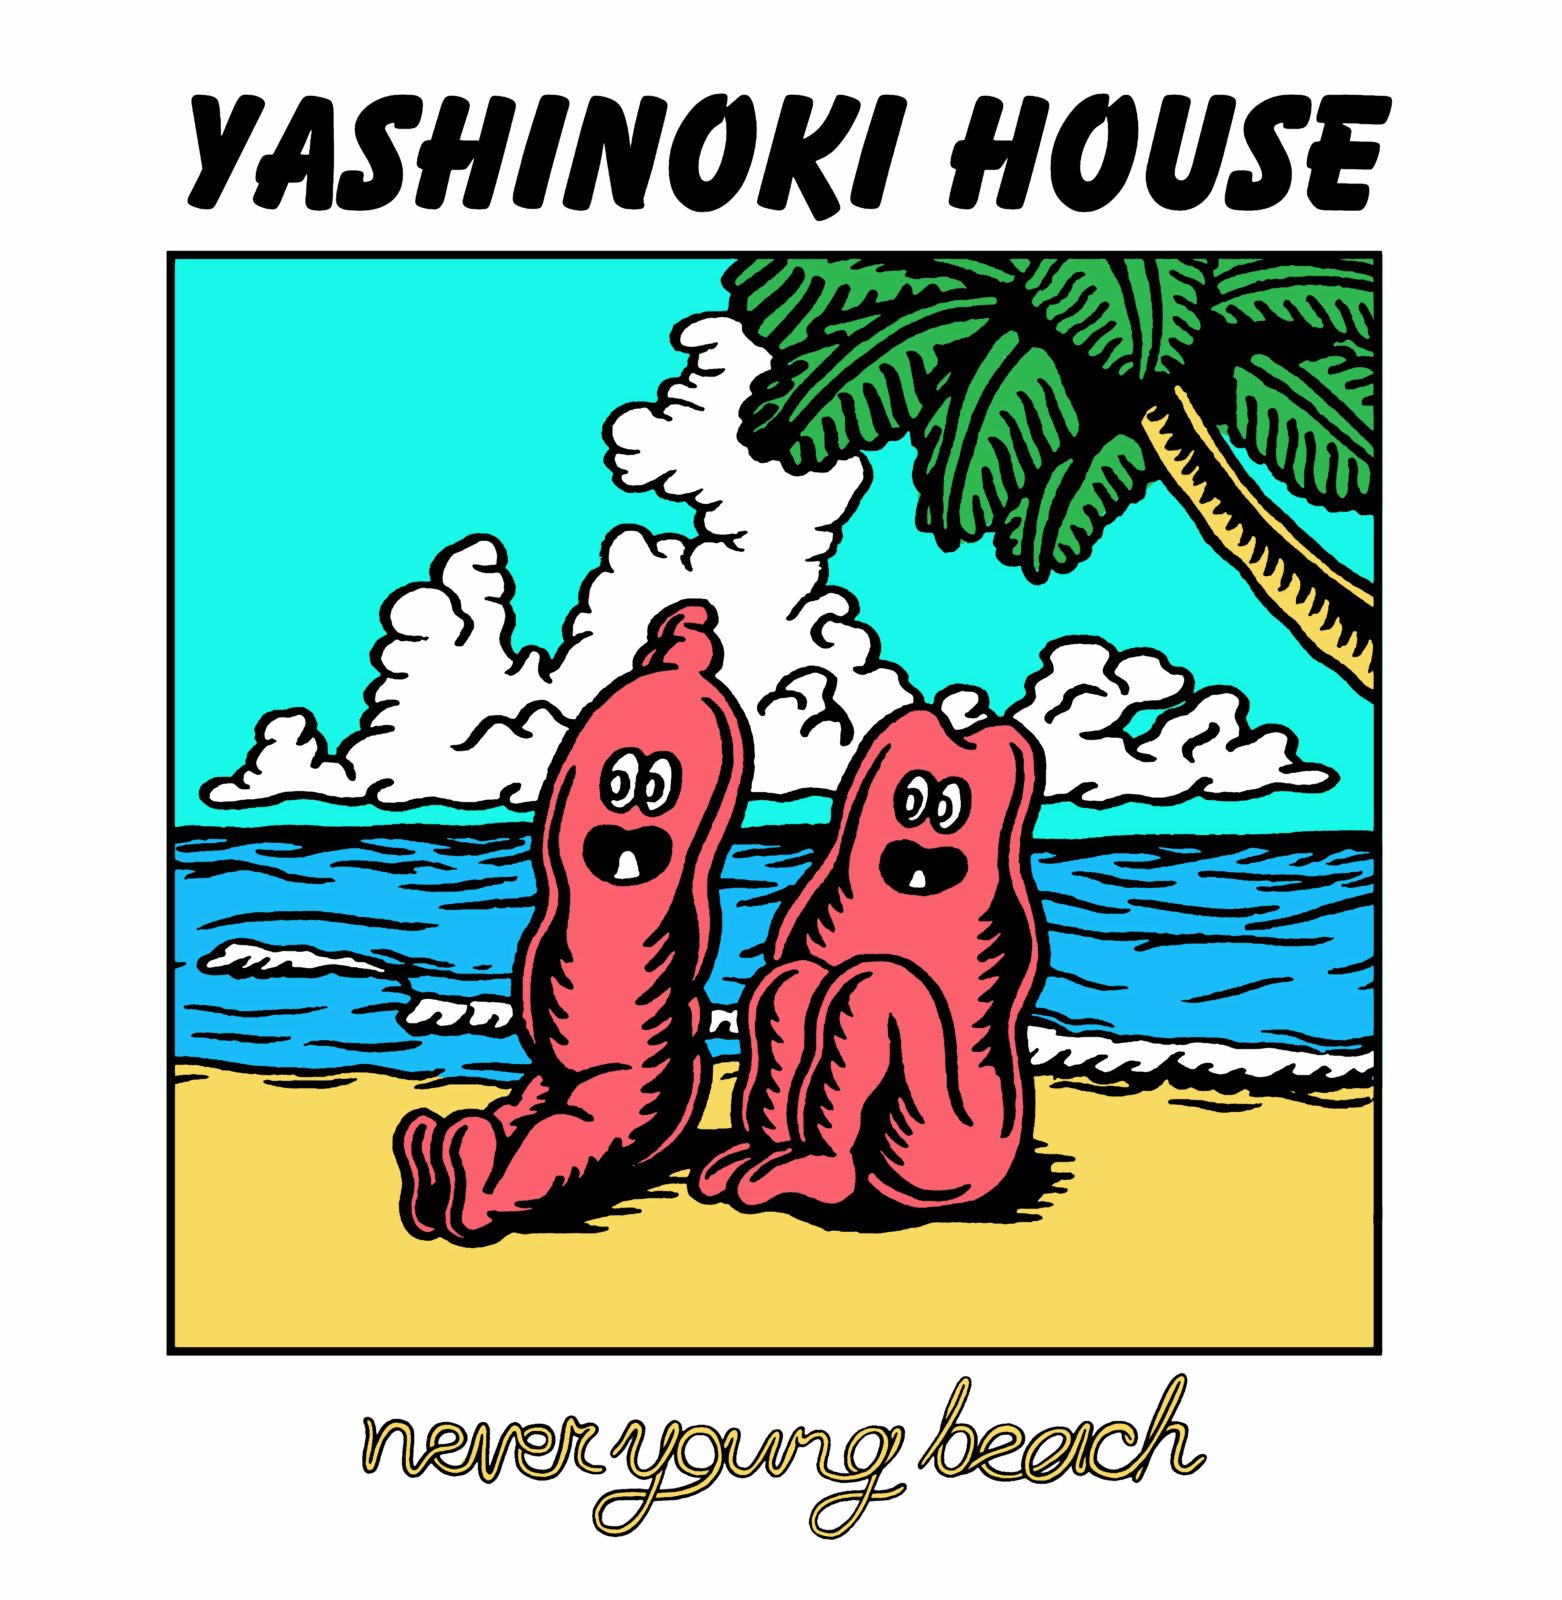 never young beach「YASHINOKI HOUSE」「fam fam」アナログ12inch盤の 